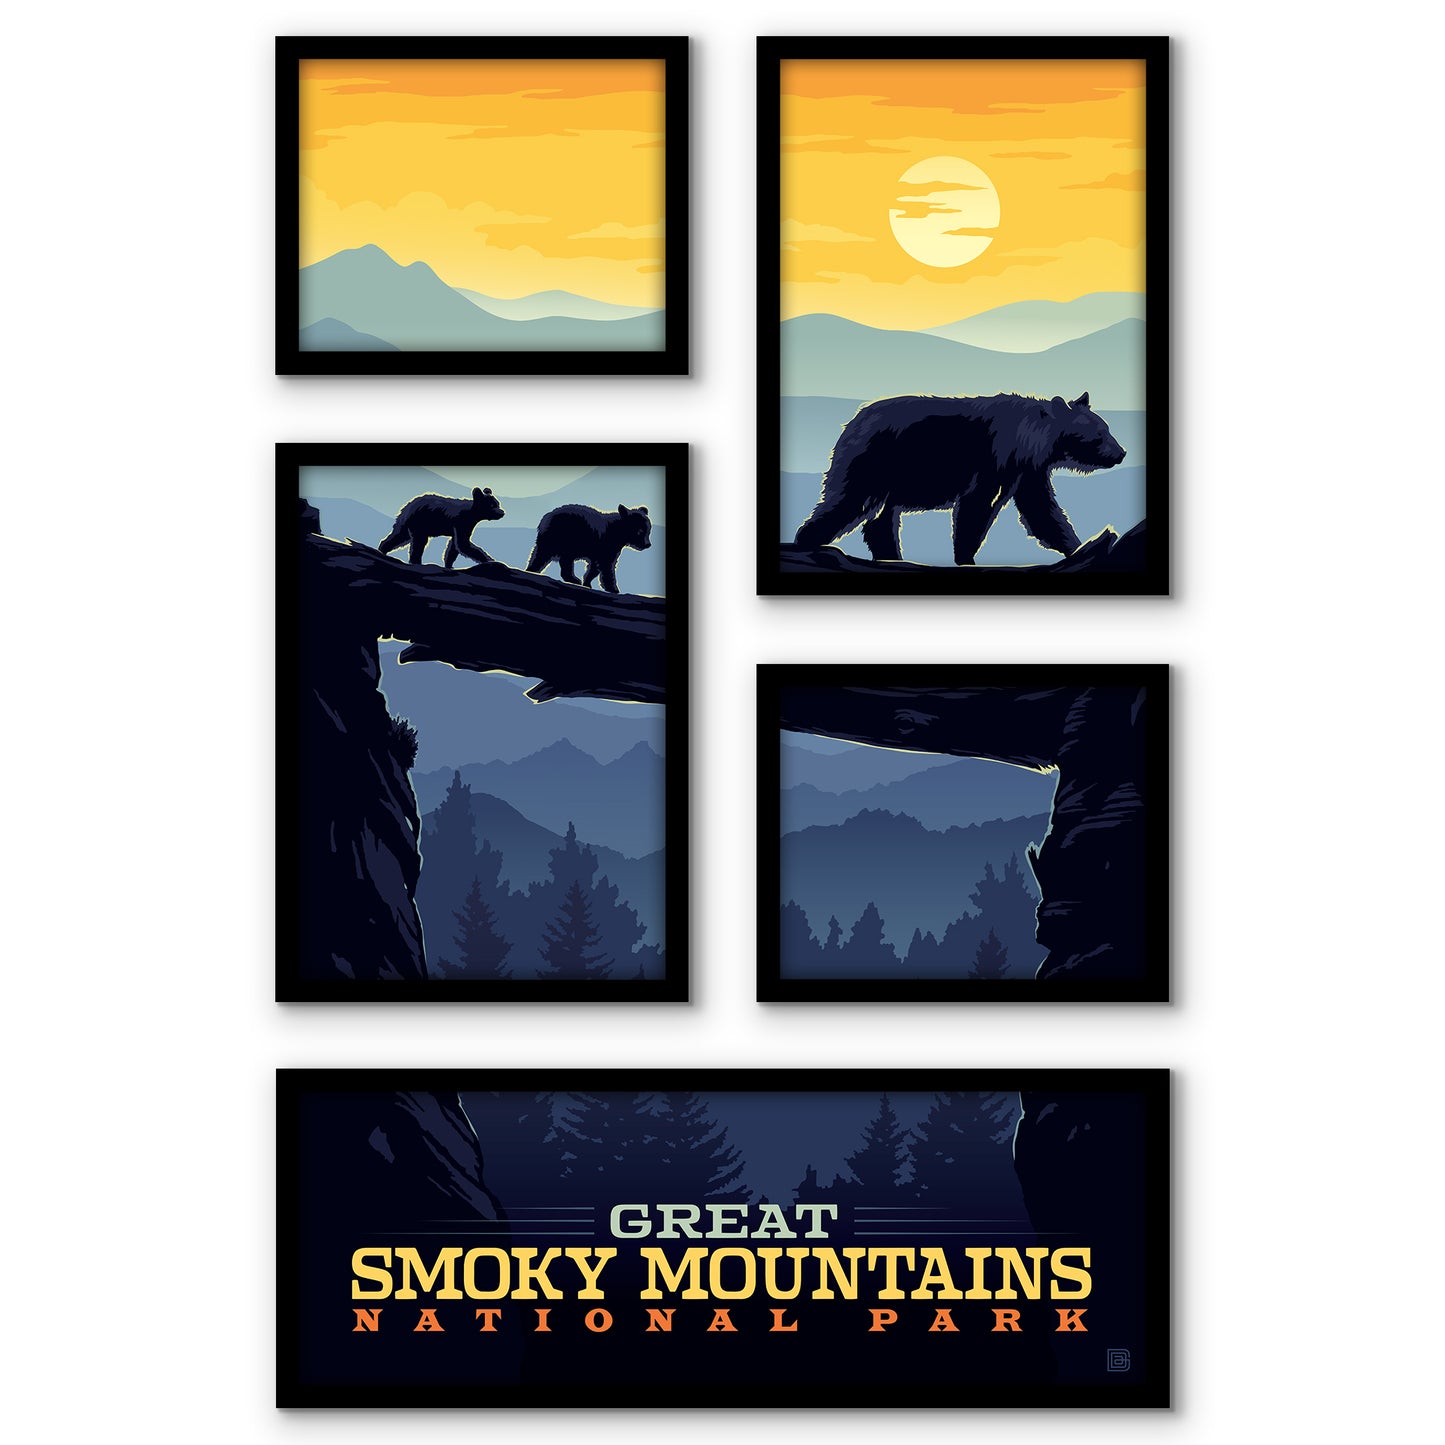 Great Smoky Mountains National Park Bear Crossing Sunset 5 Piece Grid Wall Art Room Decor Set - Framed